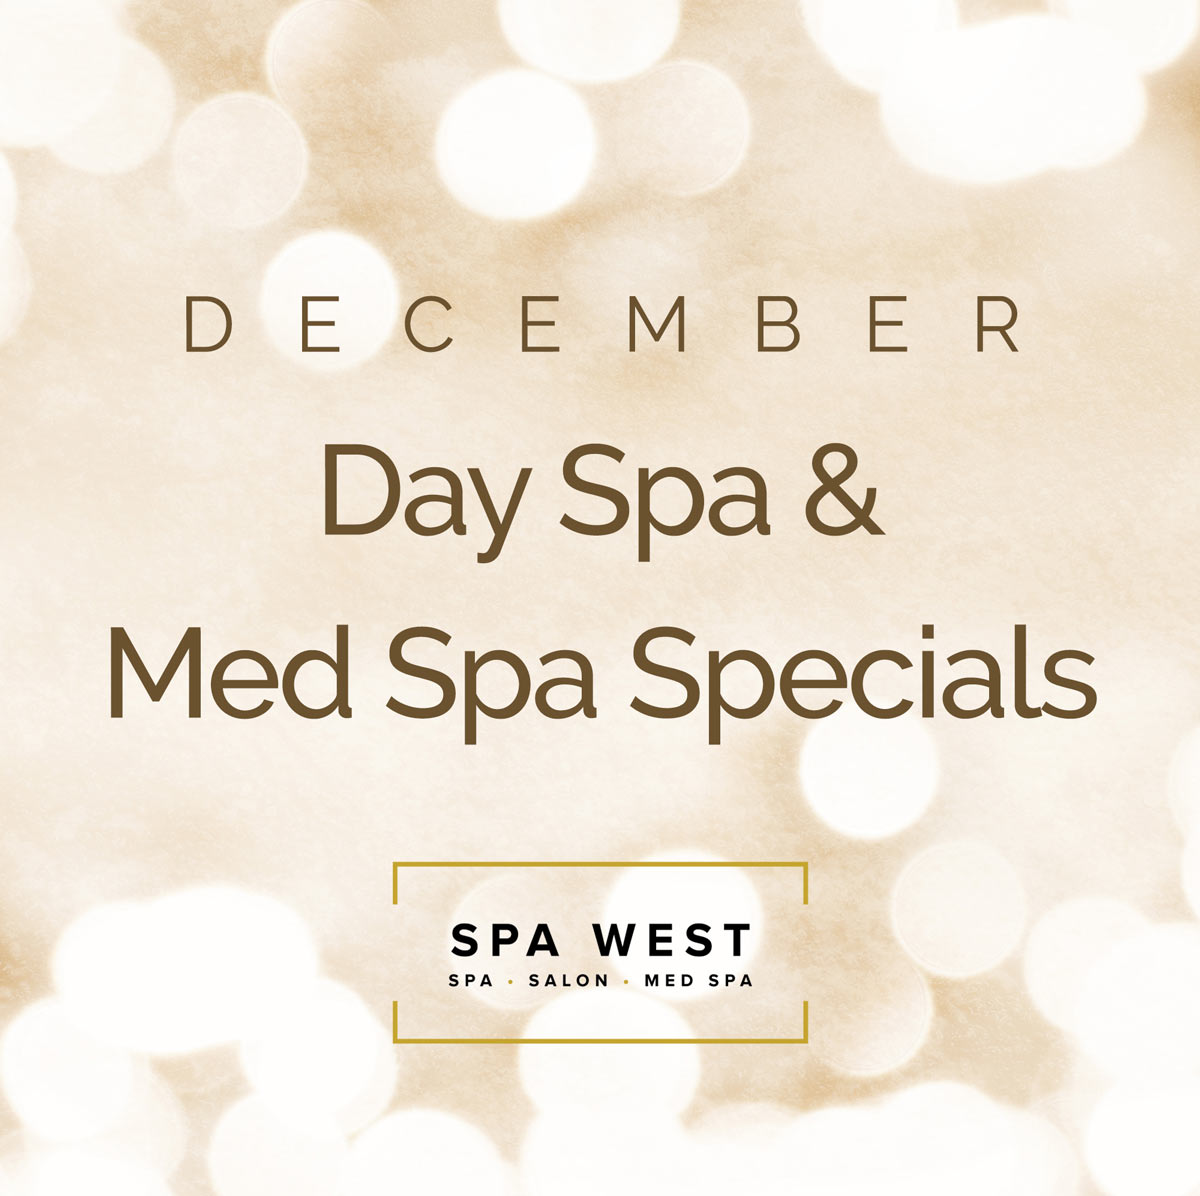 December Specials at Spa West